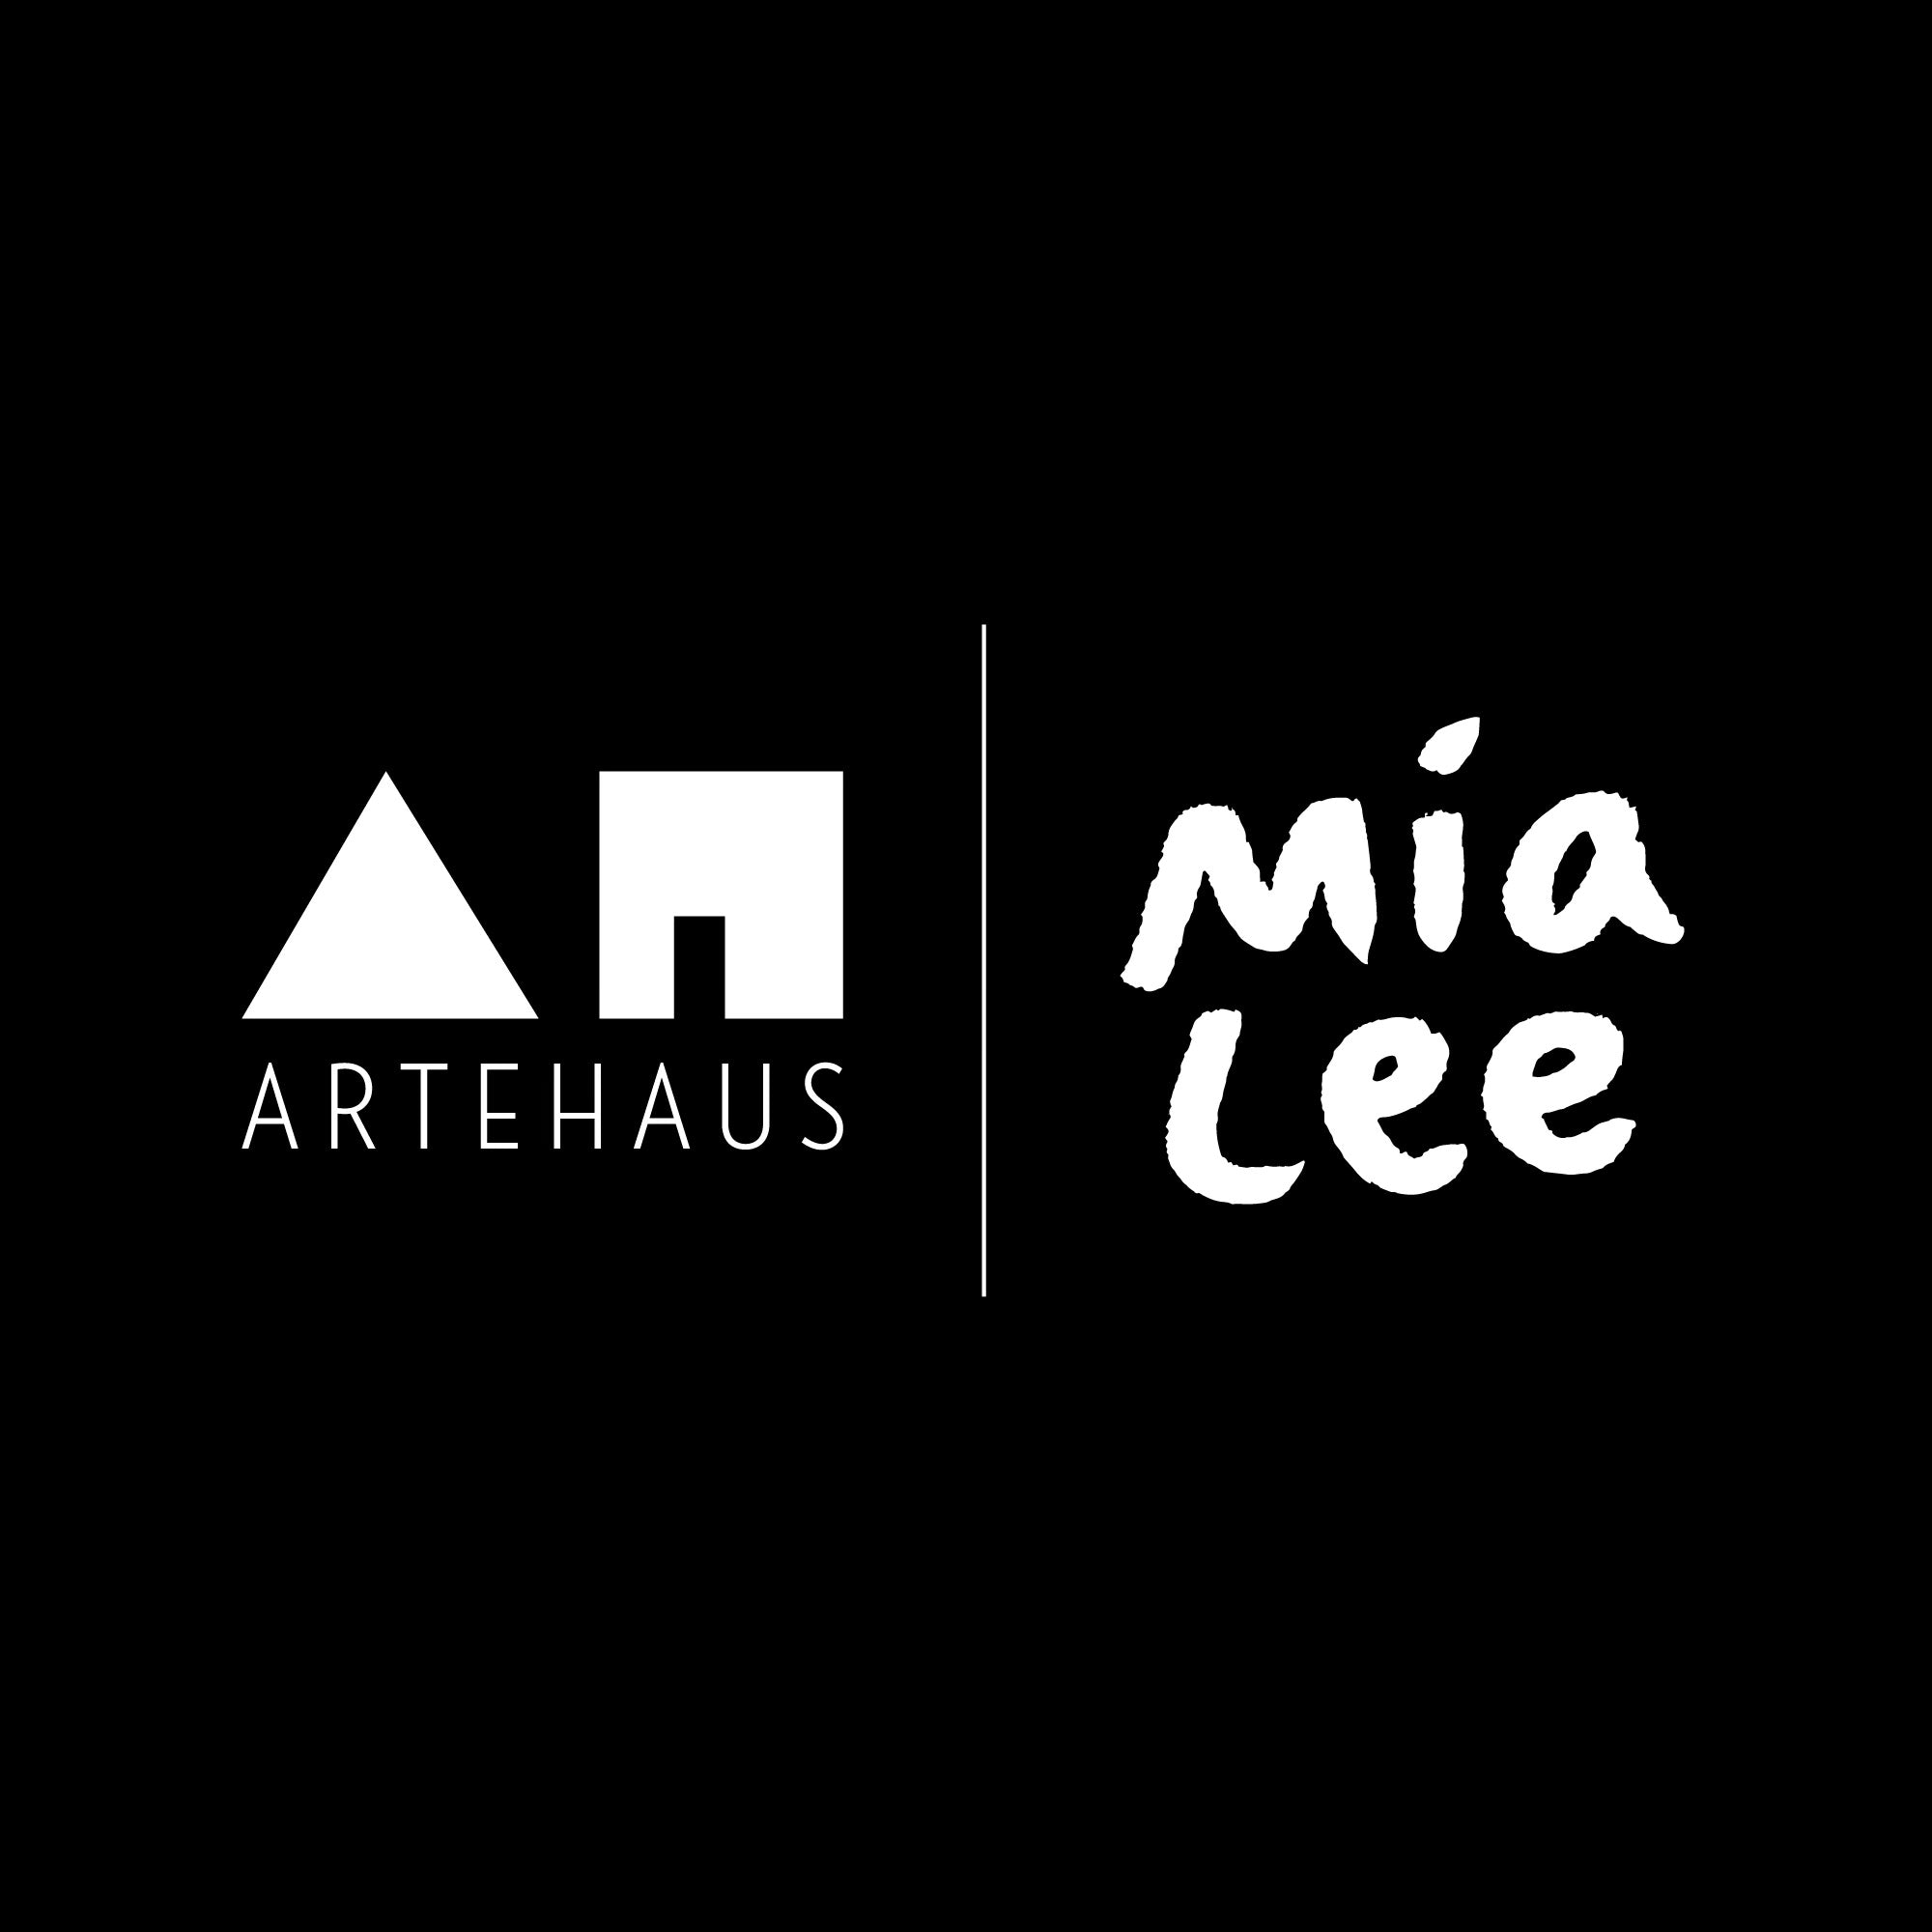 Mia Lee The Arte Haus